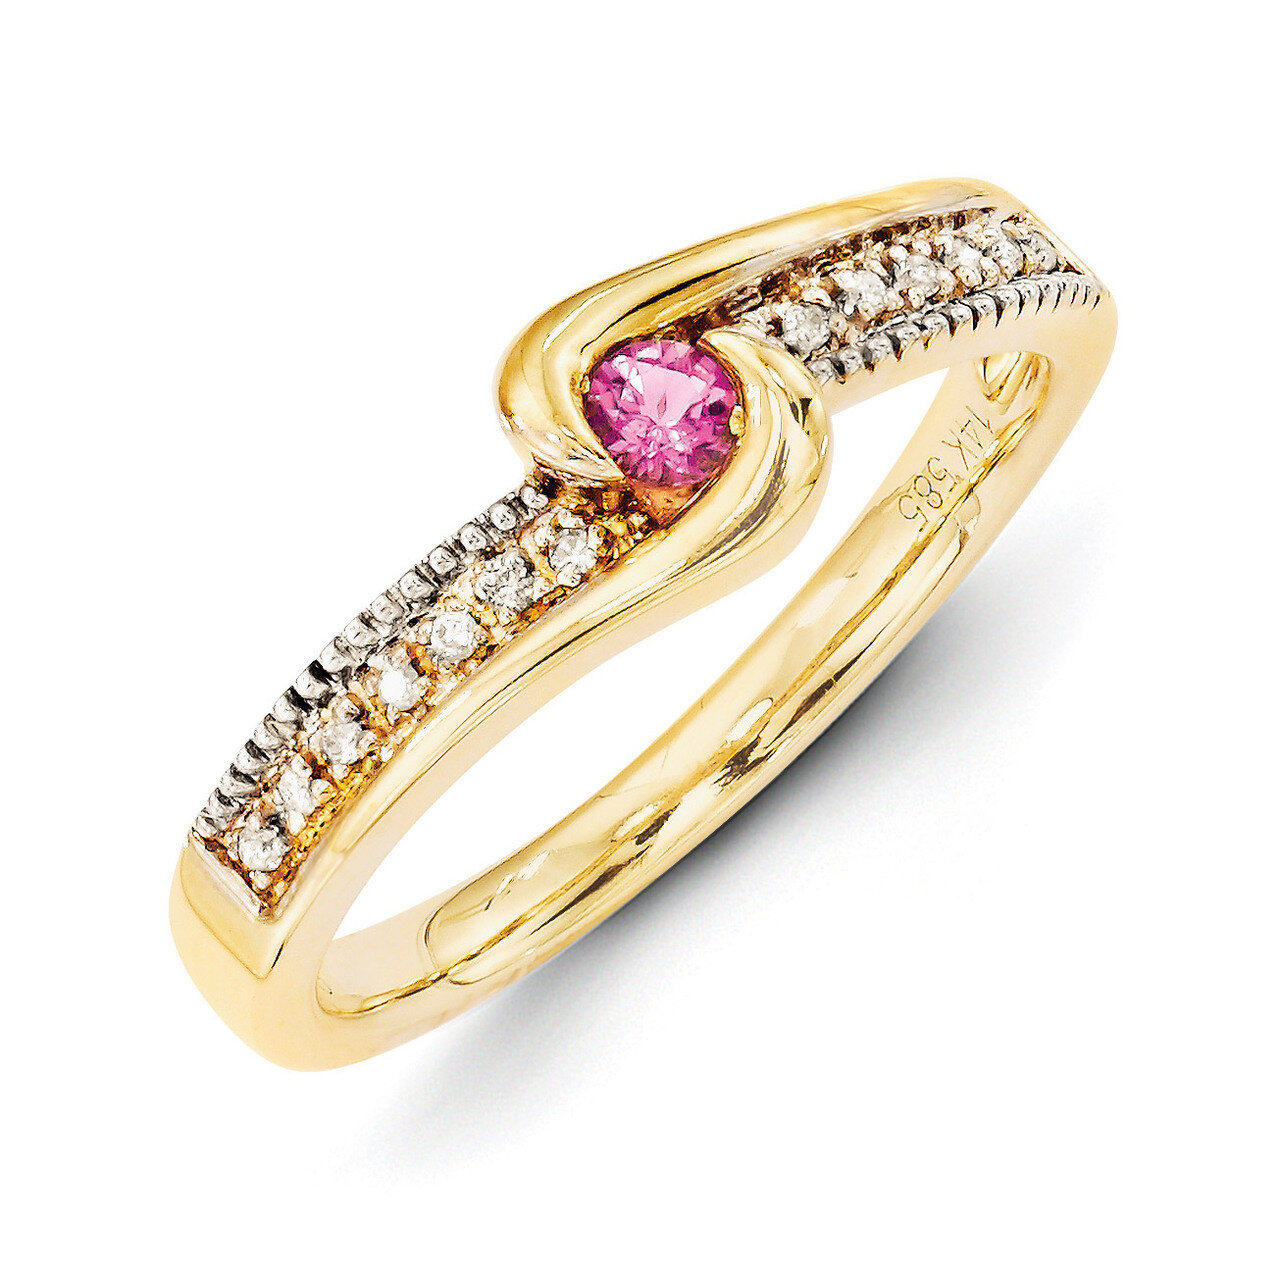 1 Birthstone Family Jewelry Diamond Semi-Set Ring 14k Yellow Gold XMR39/1